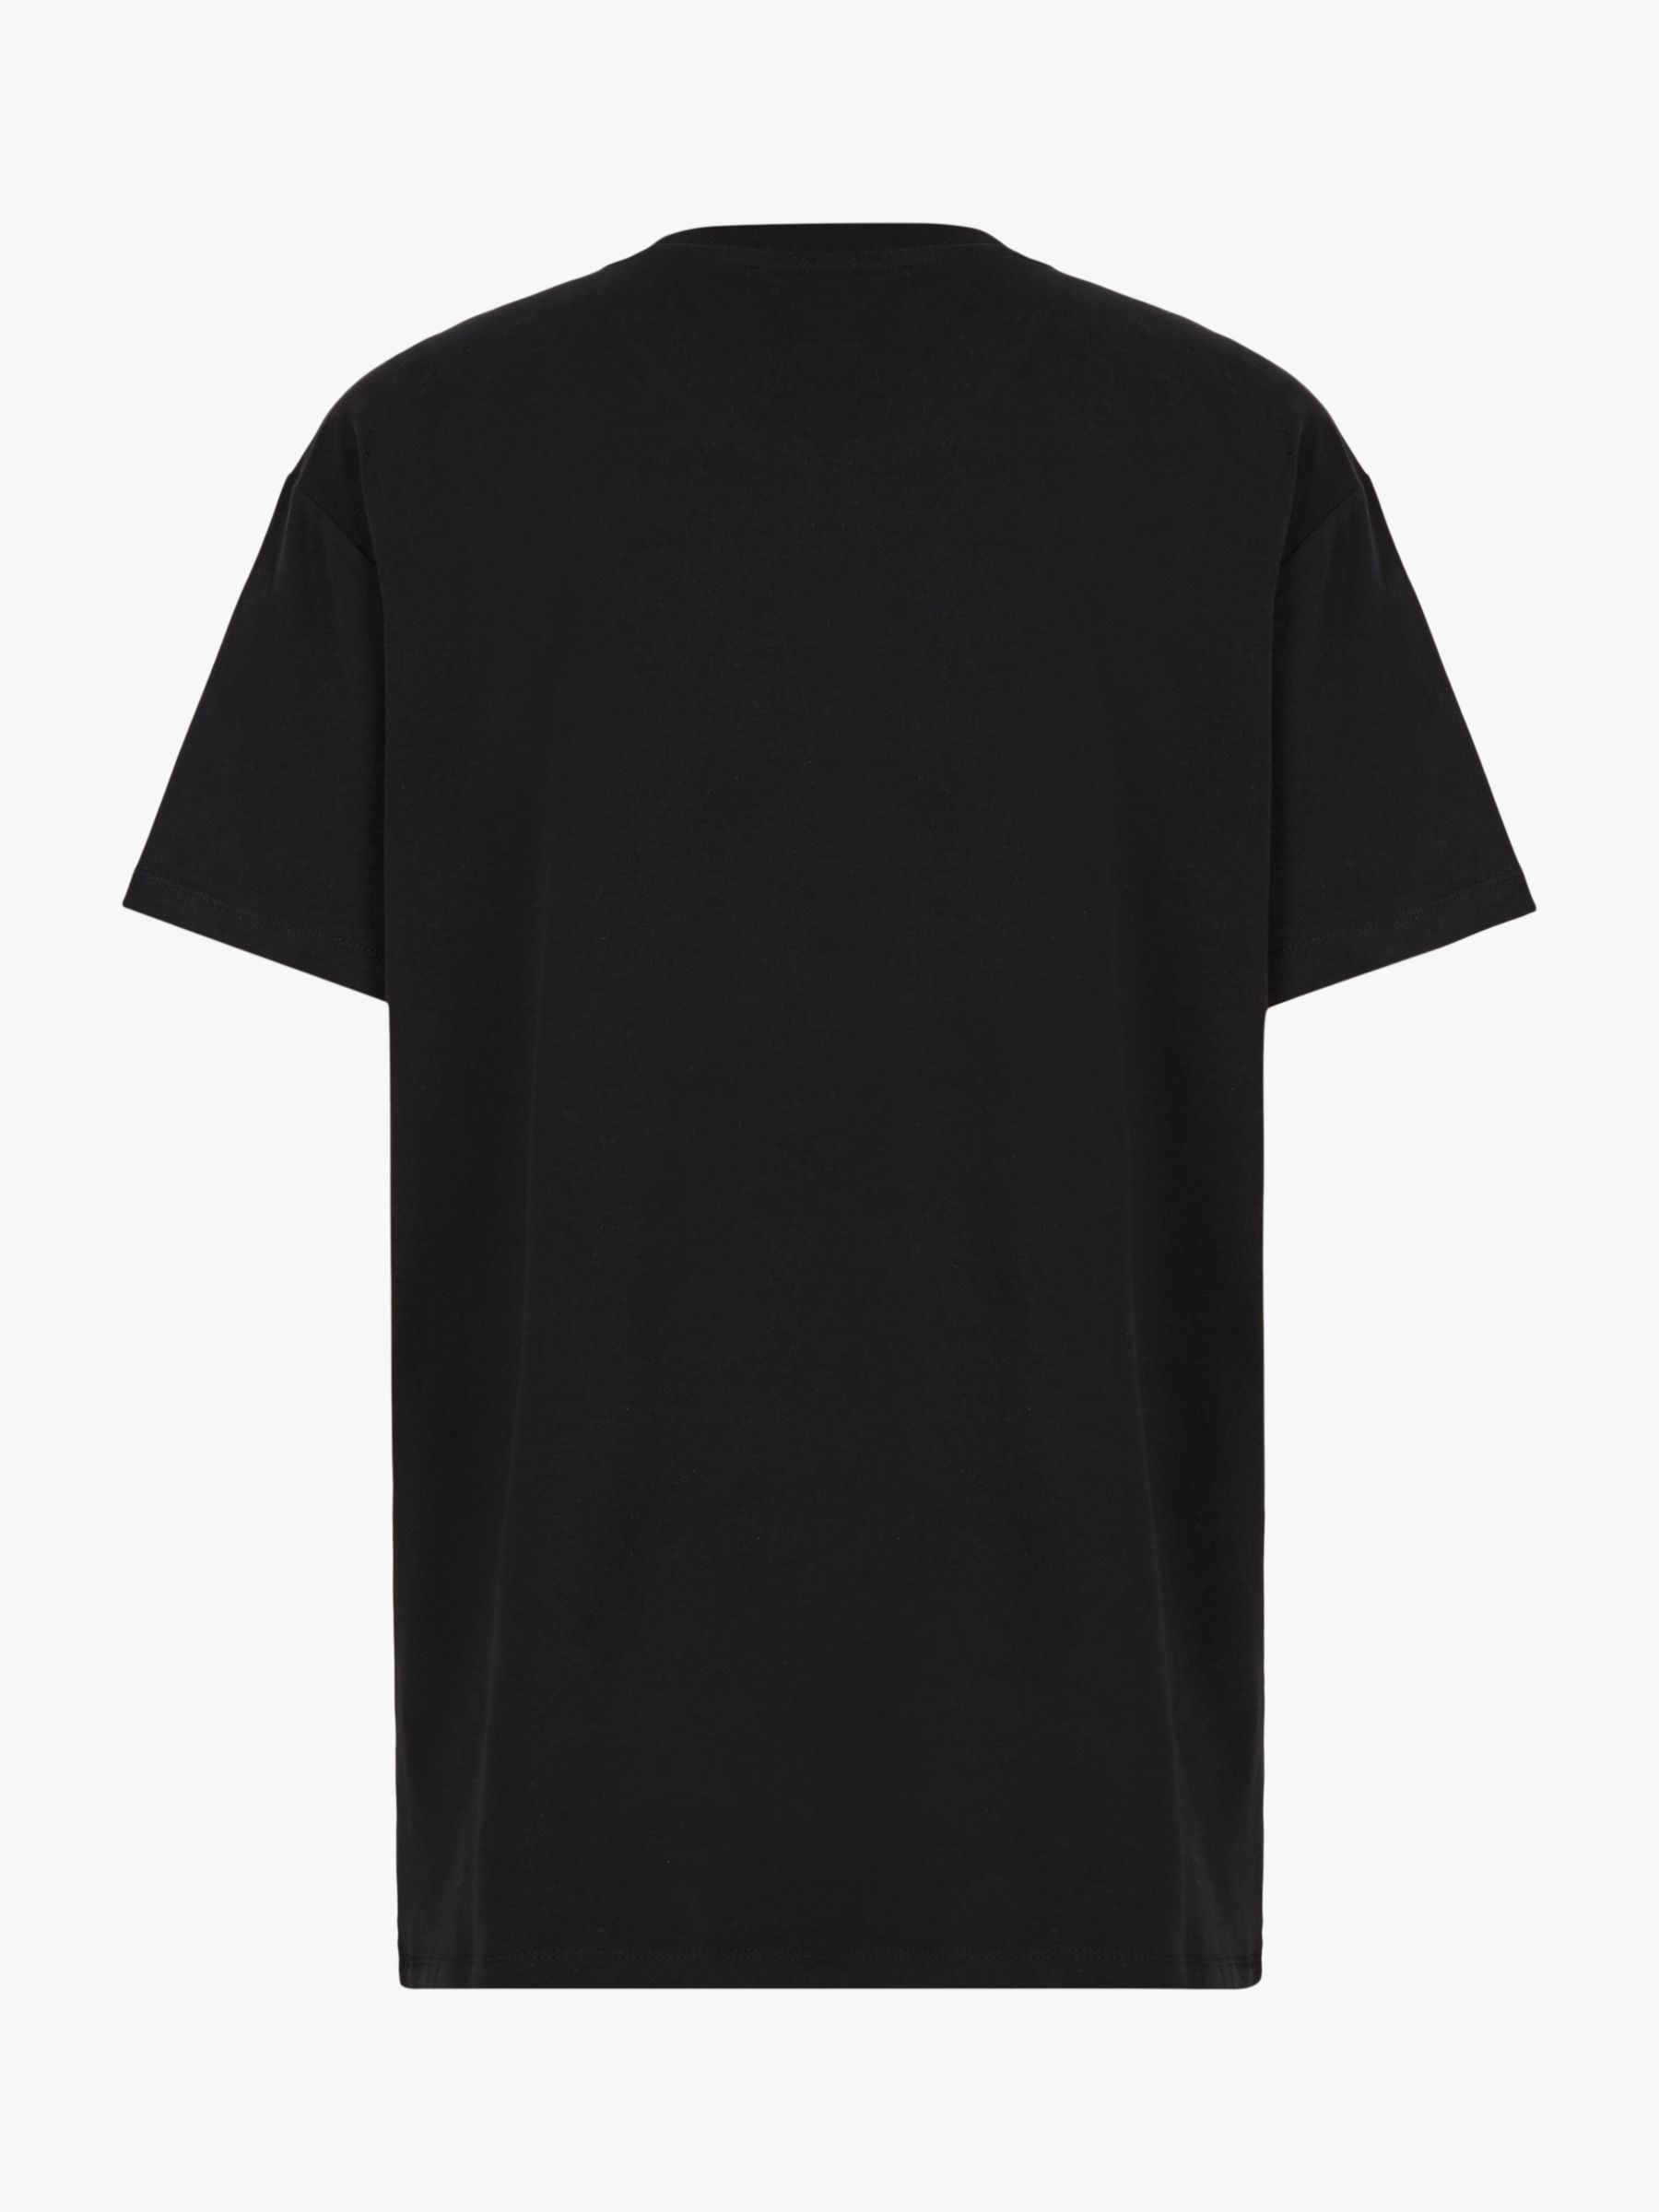 AllSaints Quietus Abstract Logo T-Shirt, Black